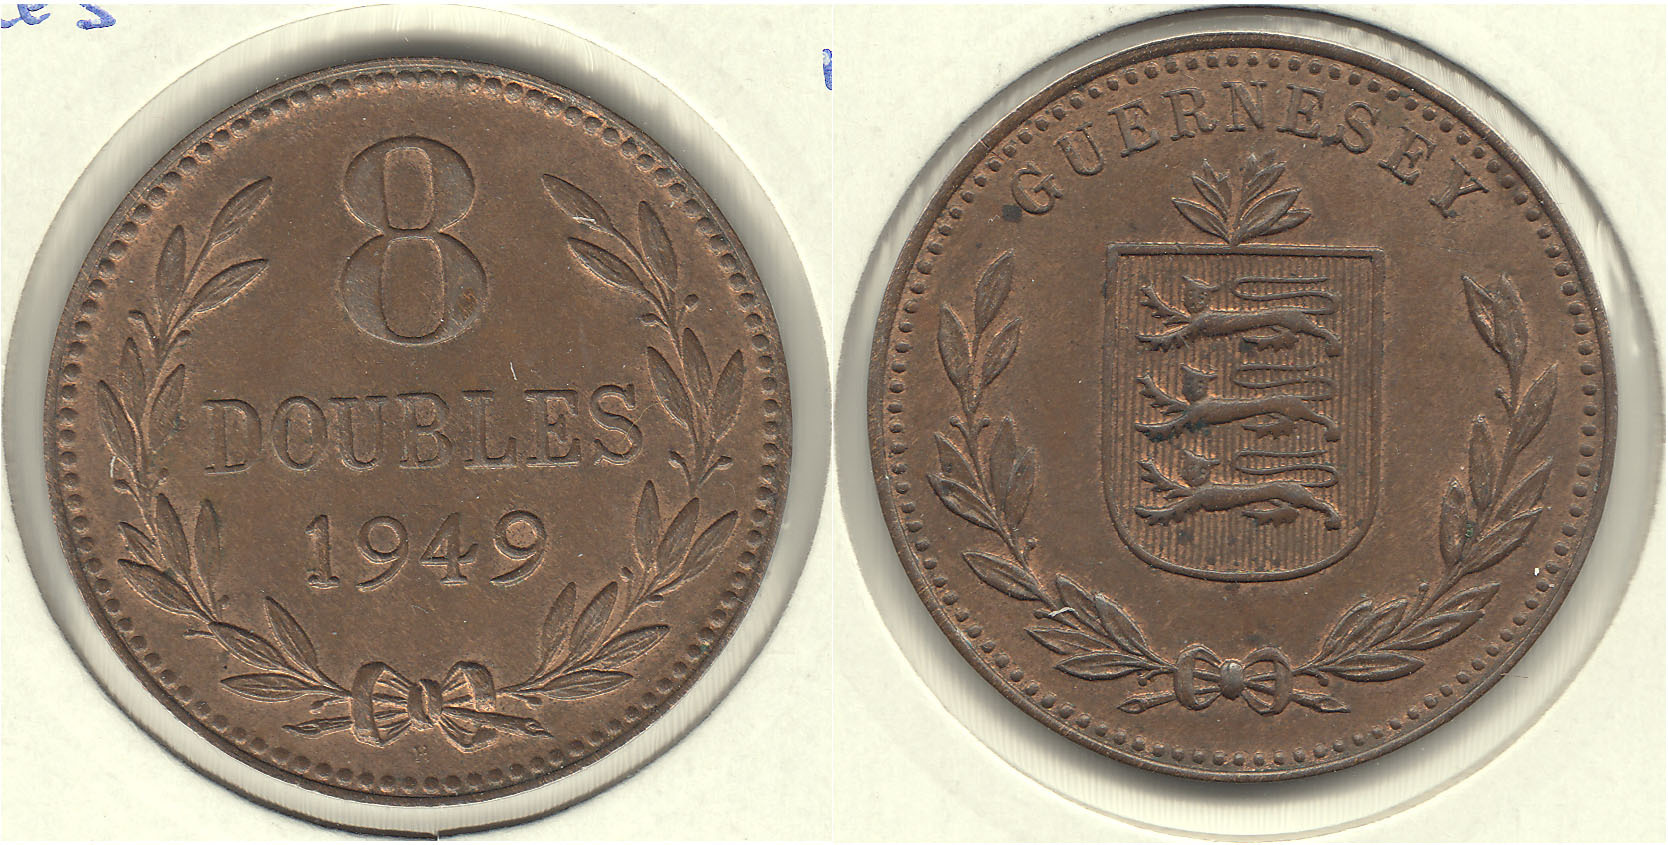 GUERNESEY - GUERNSEY. 8 DOBLES (DOUBLES) DE 1949 H.